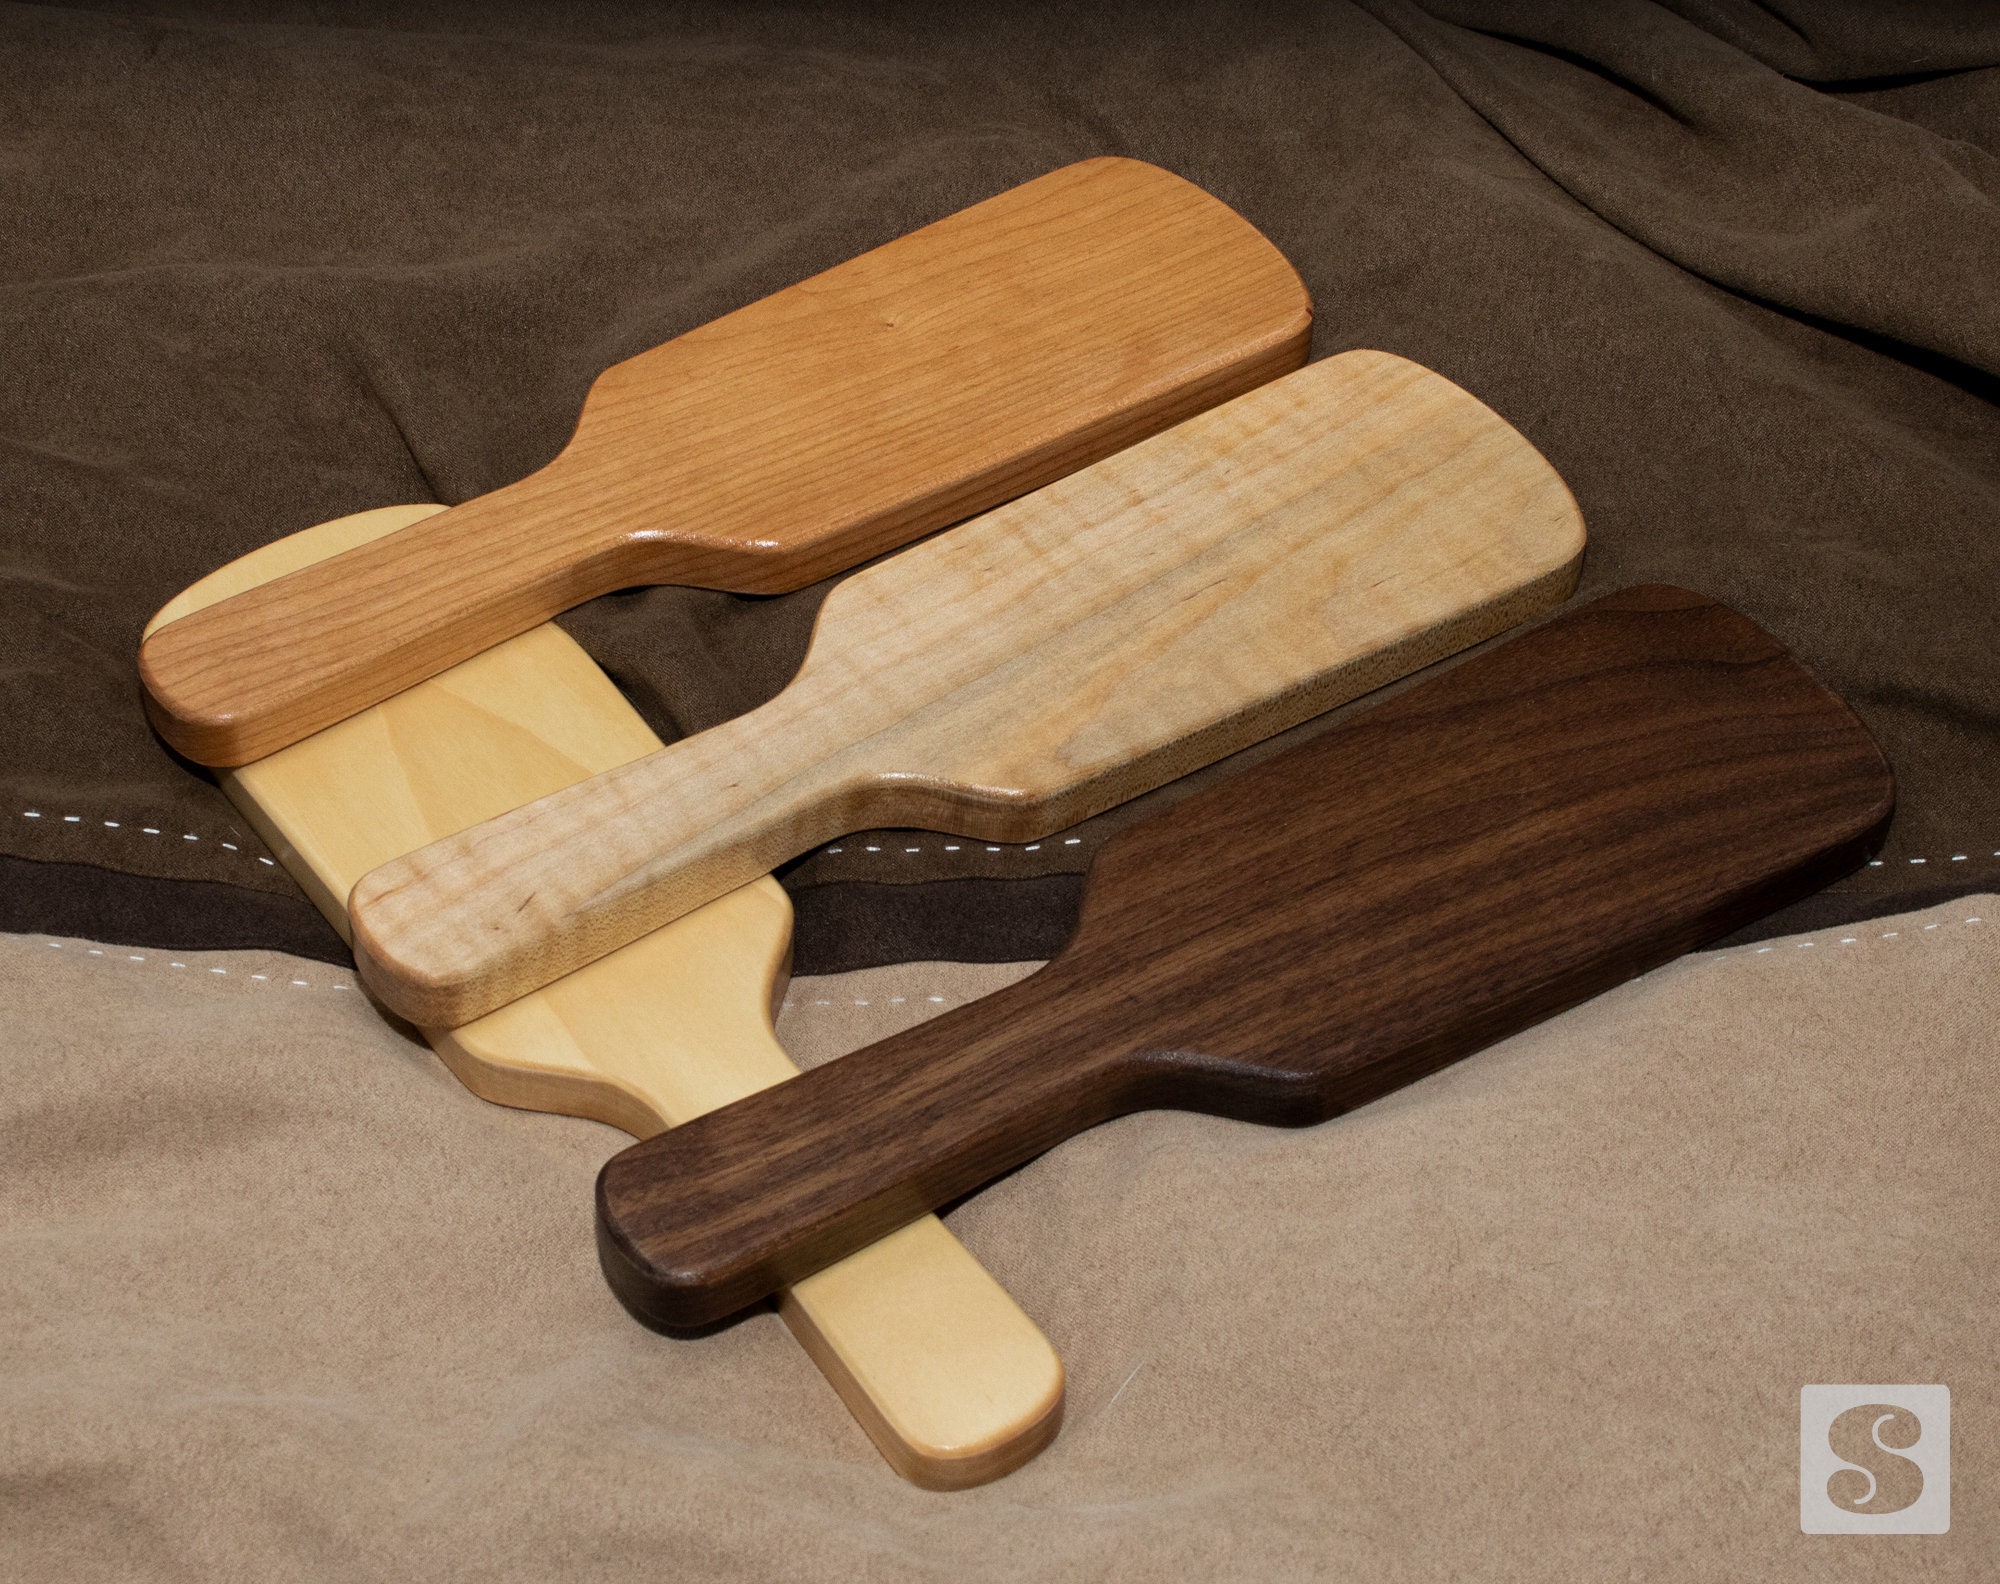 alban gjonbalaj add spanked with a wooden paddle photo